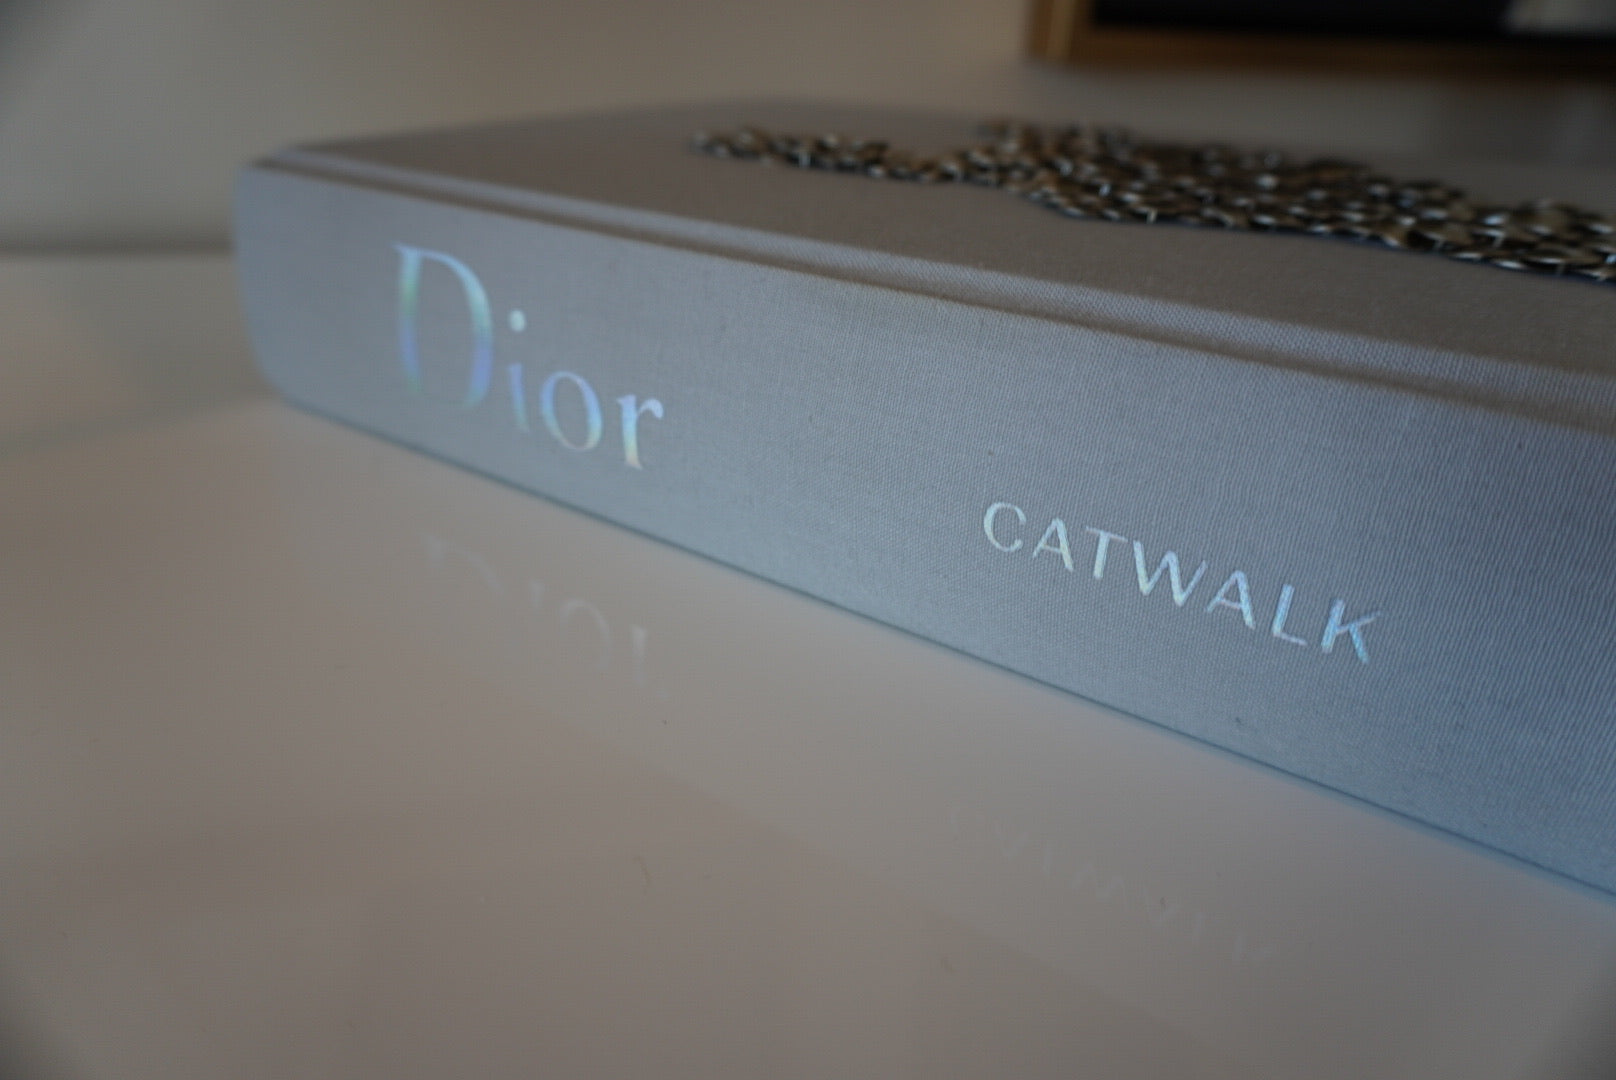 Rockstud Dior Catwalk Book – The Bag Broker